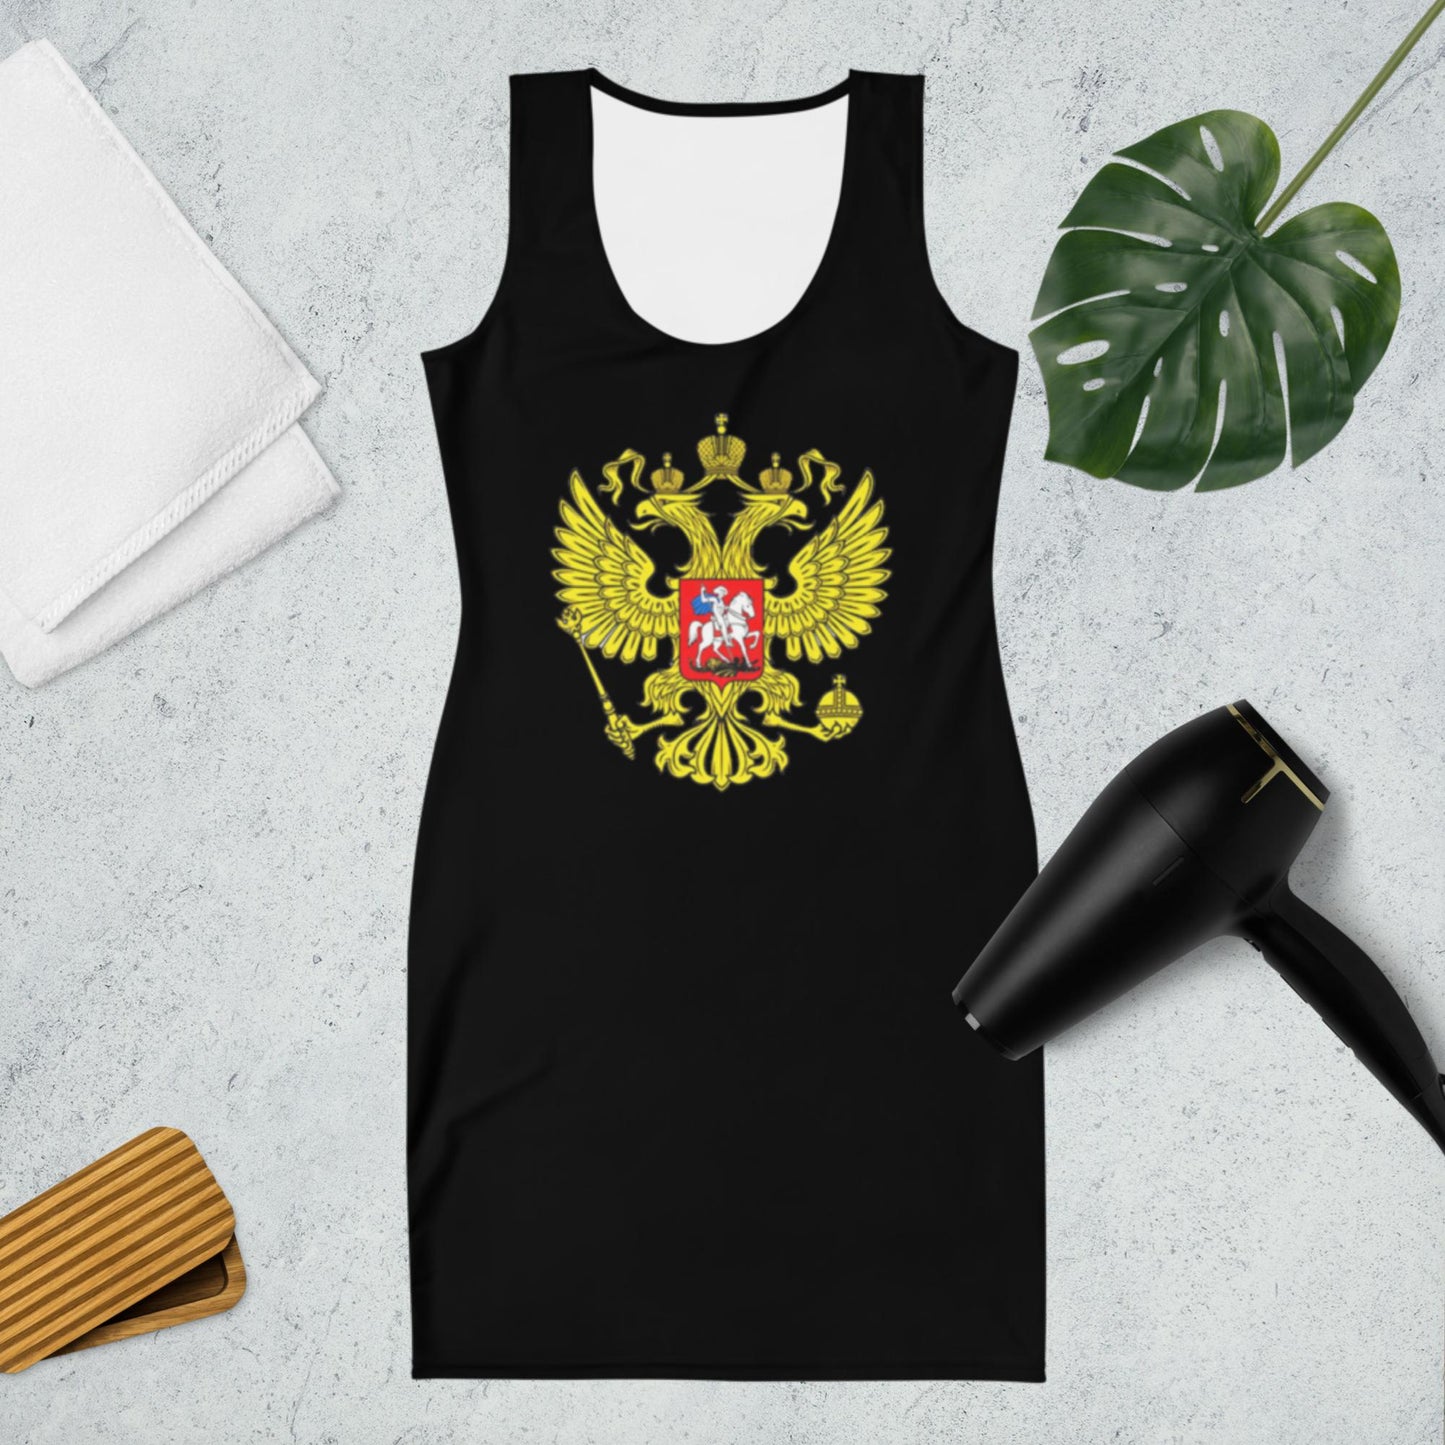 Tank-Top-Kleid mit Russland-Wappen in schwarz